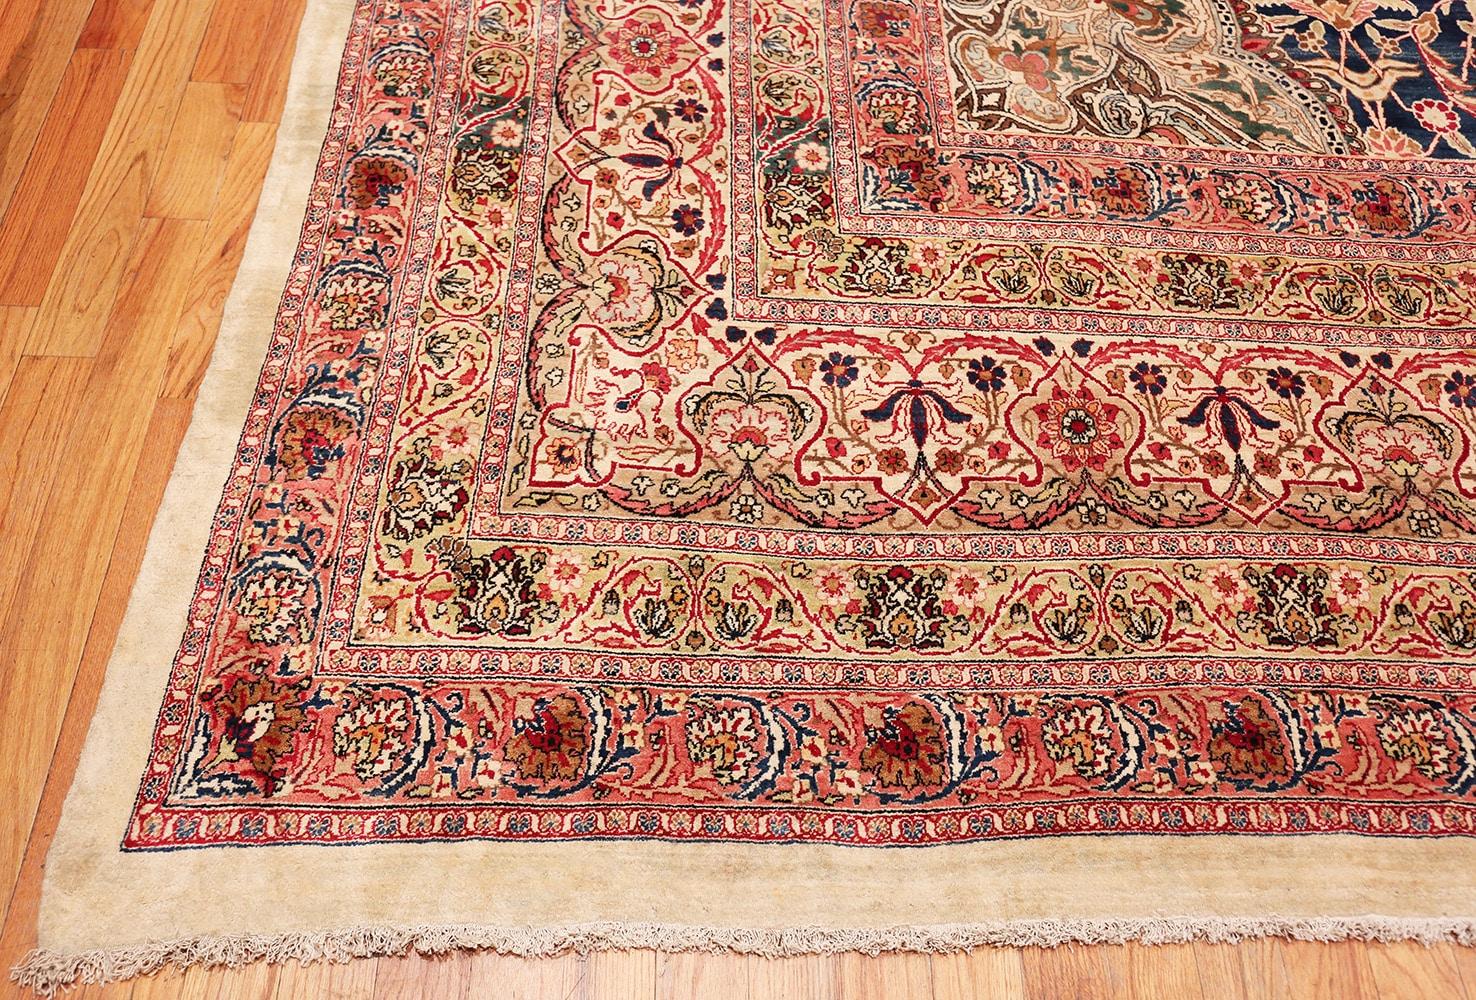 Oversized Antique Persian Kerman Rug. Size: 16' x 22'6